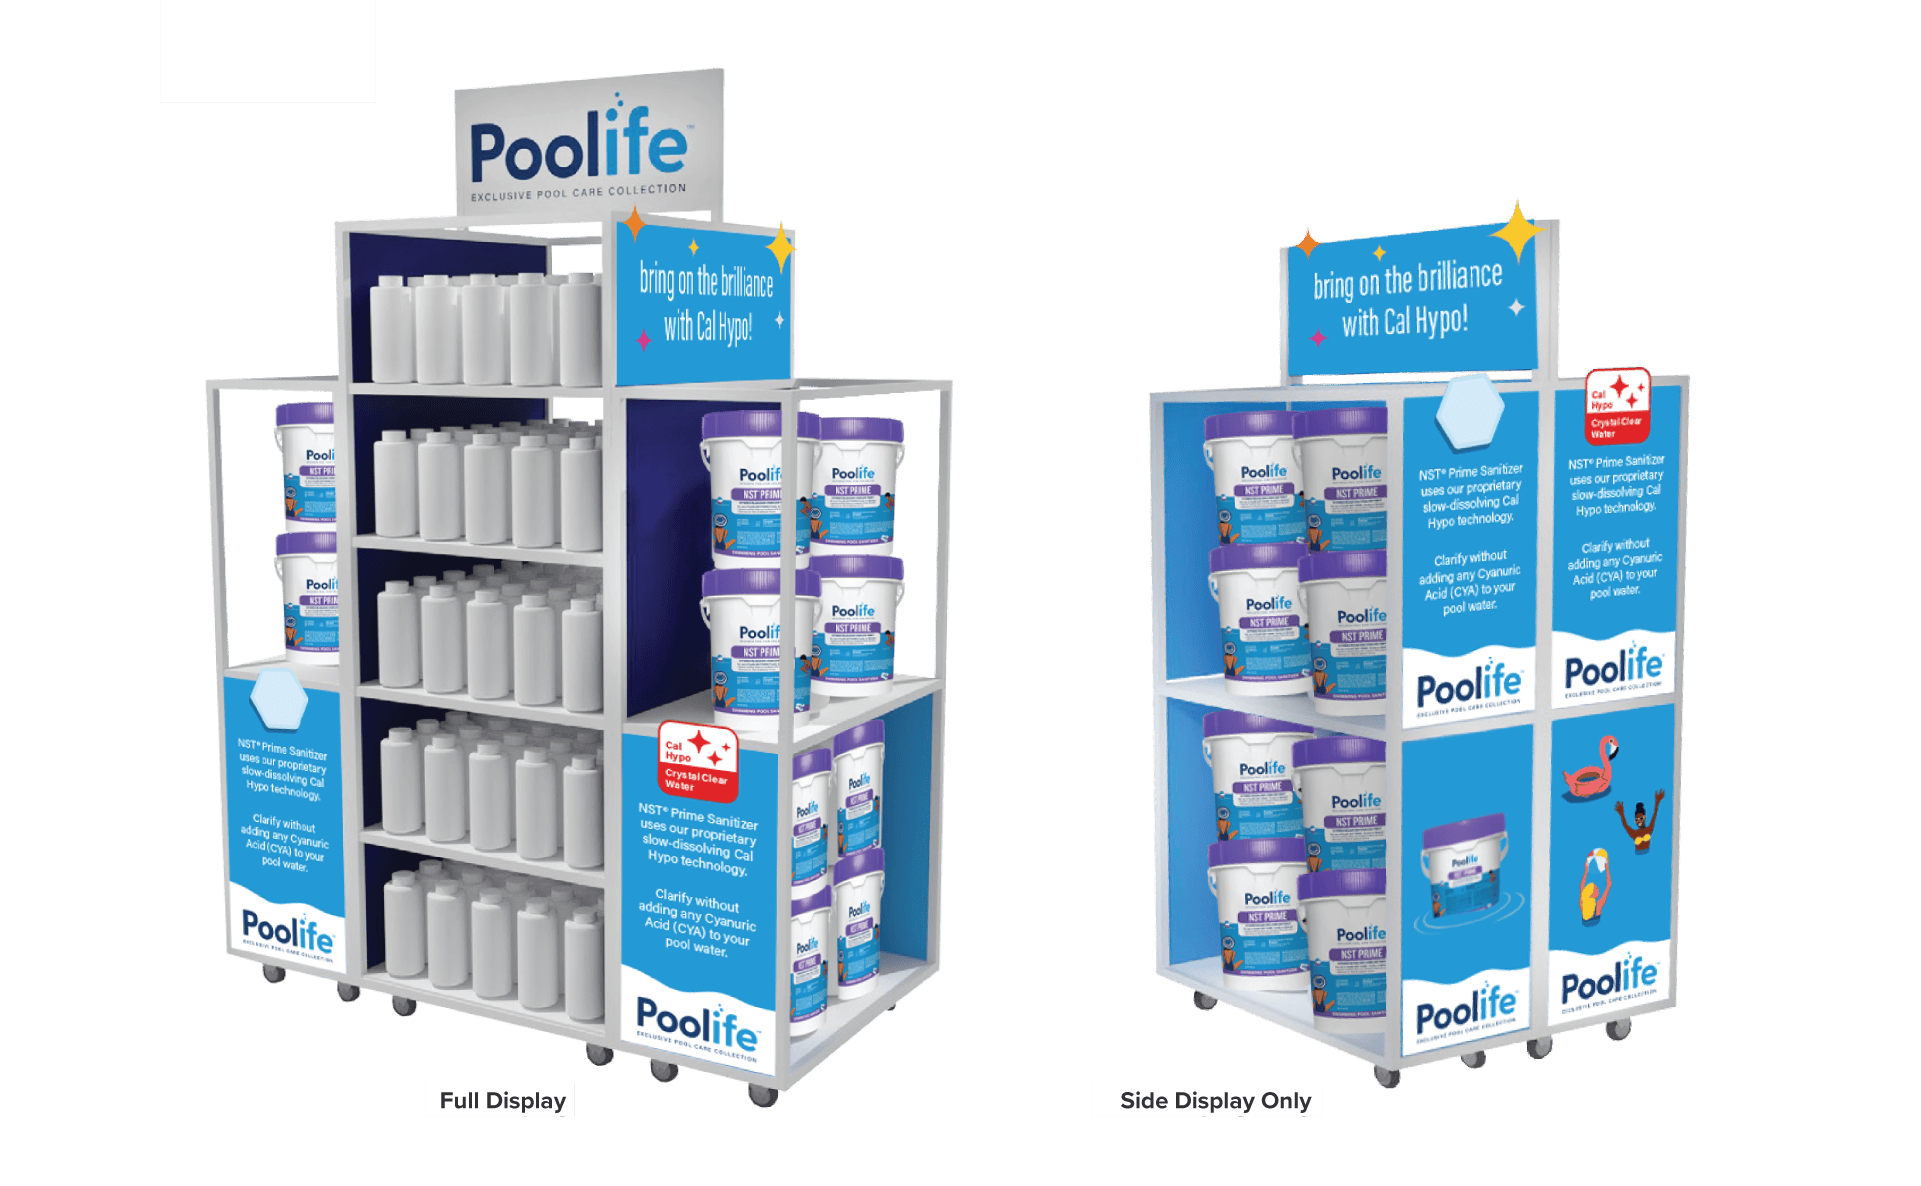 Poolife Product Displays